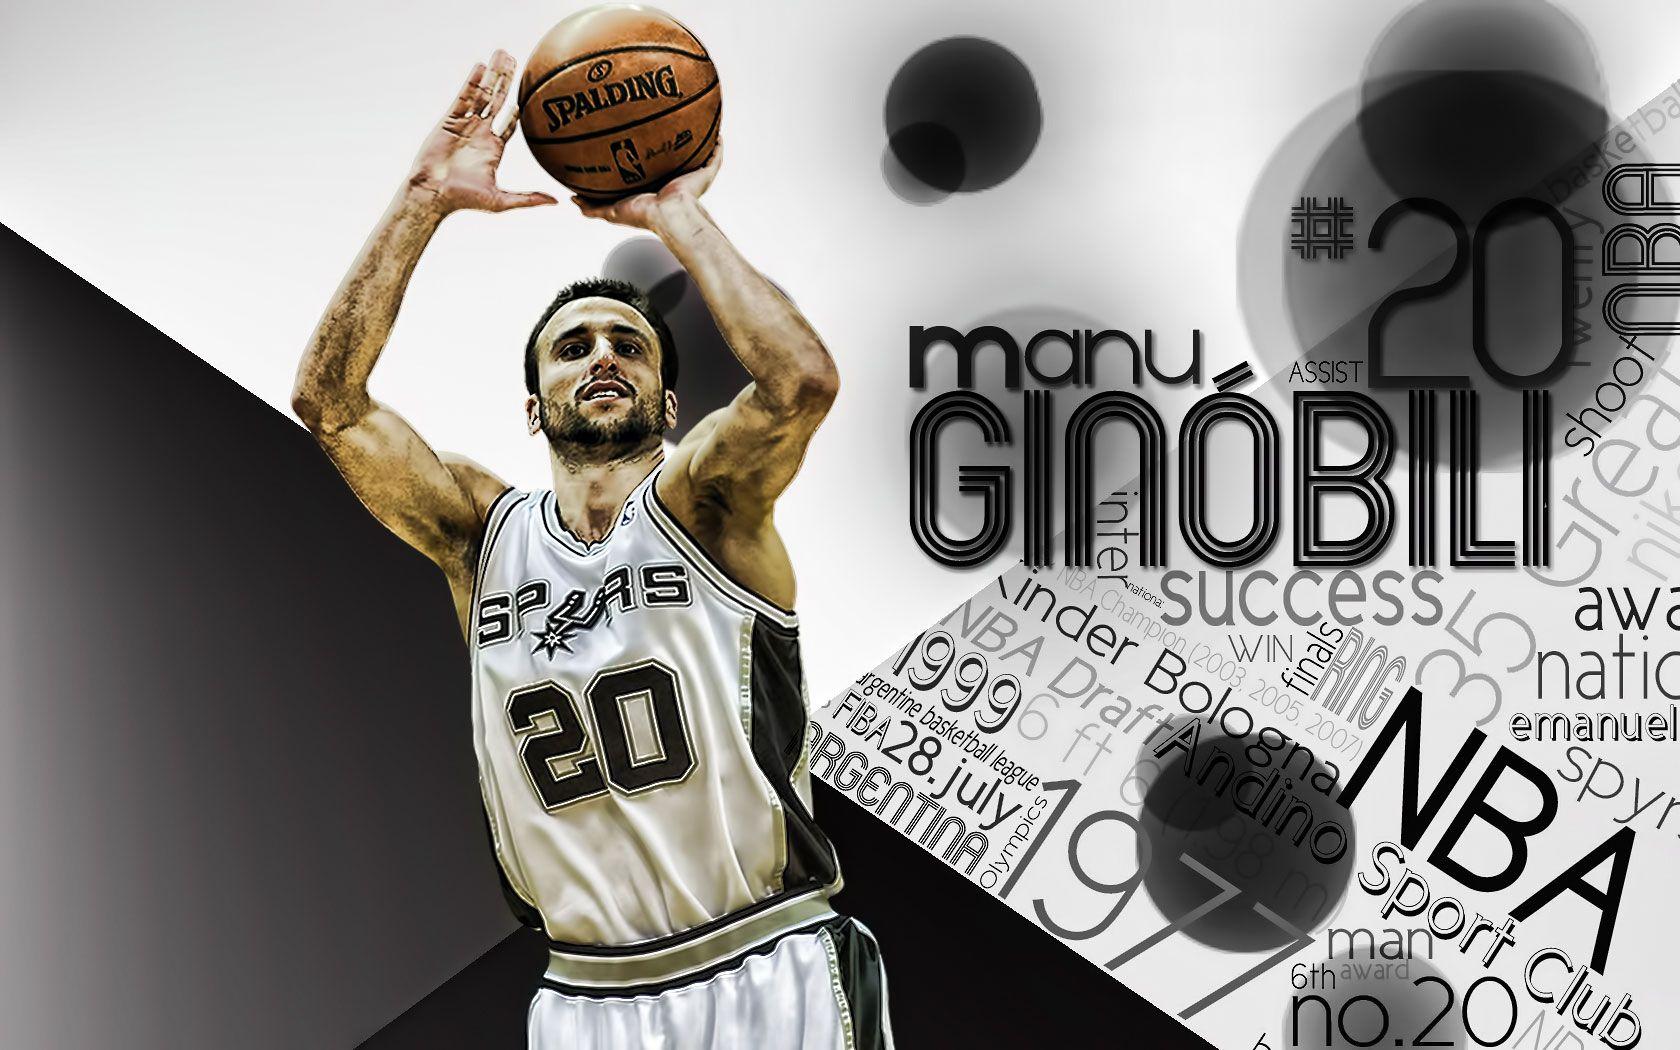 Manu Ginobili Wallpaper. Basketball Wallpaper at